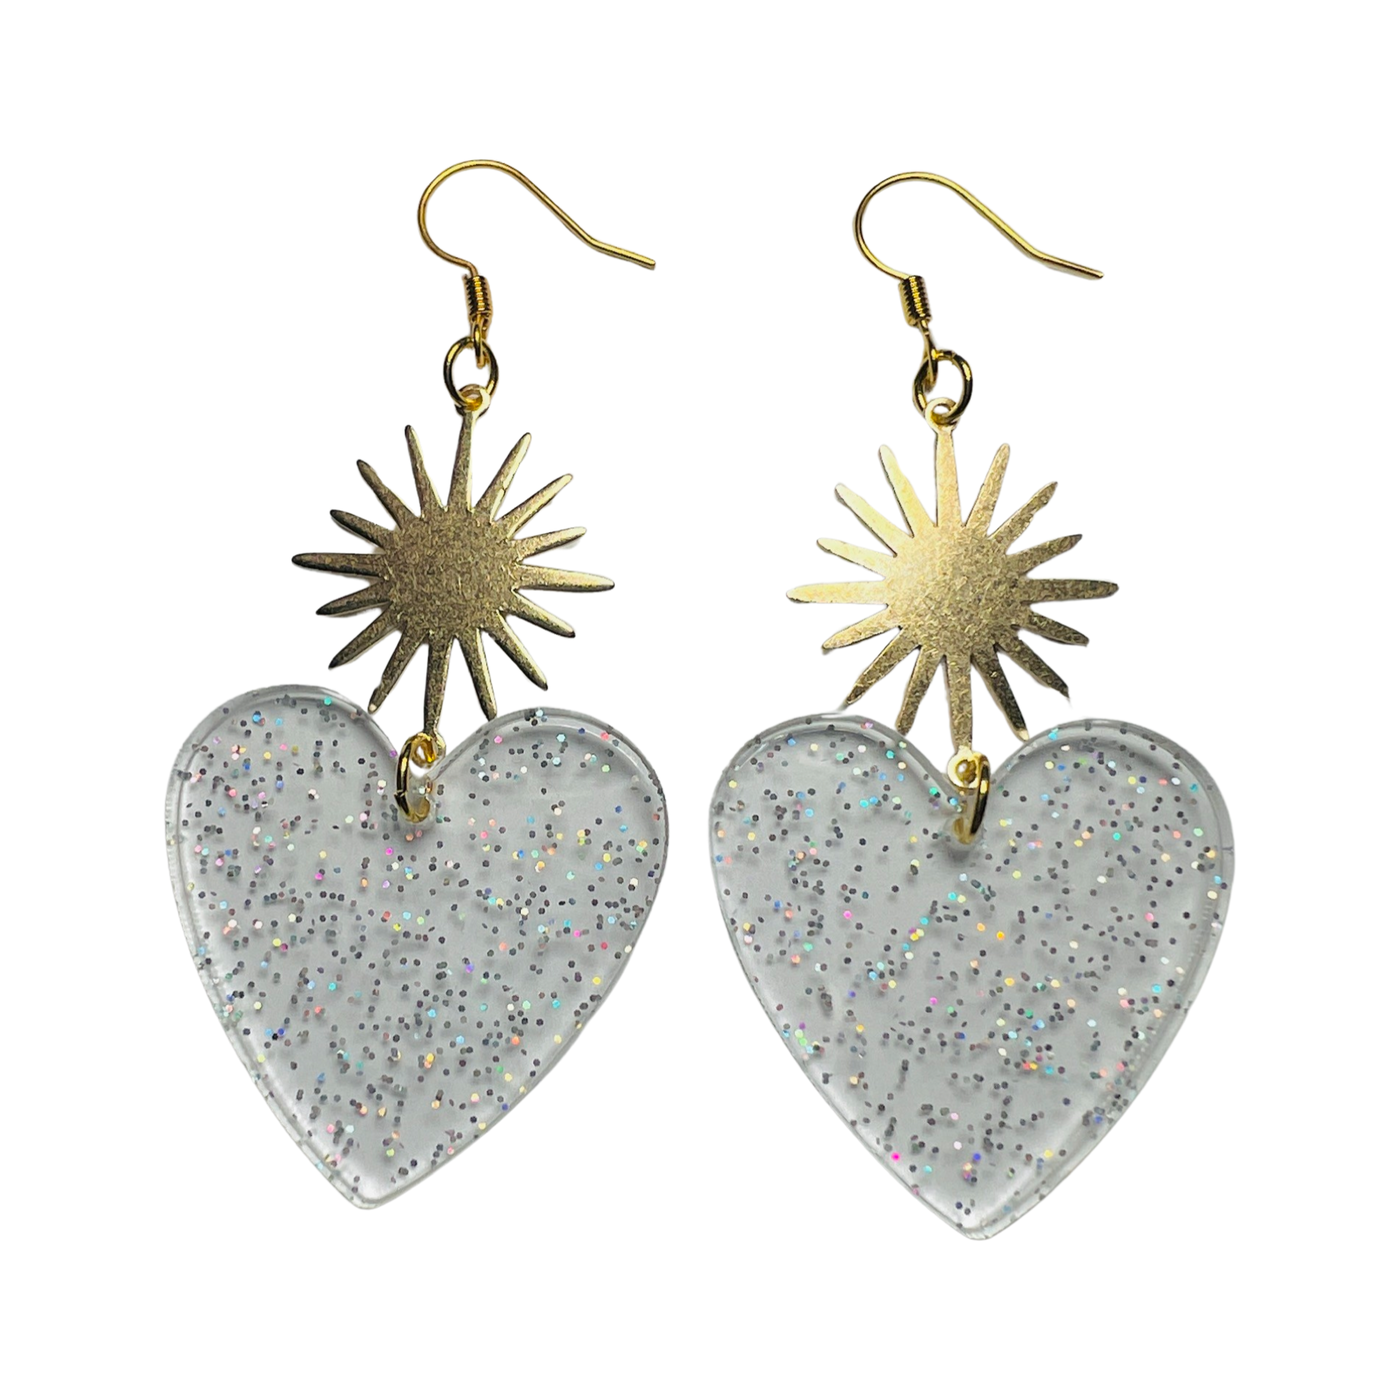 set of clear glitter resin heart earrings with a brass sunburst